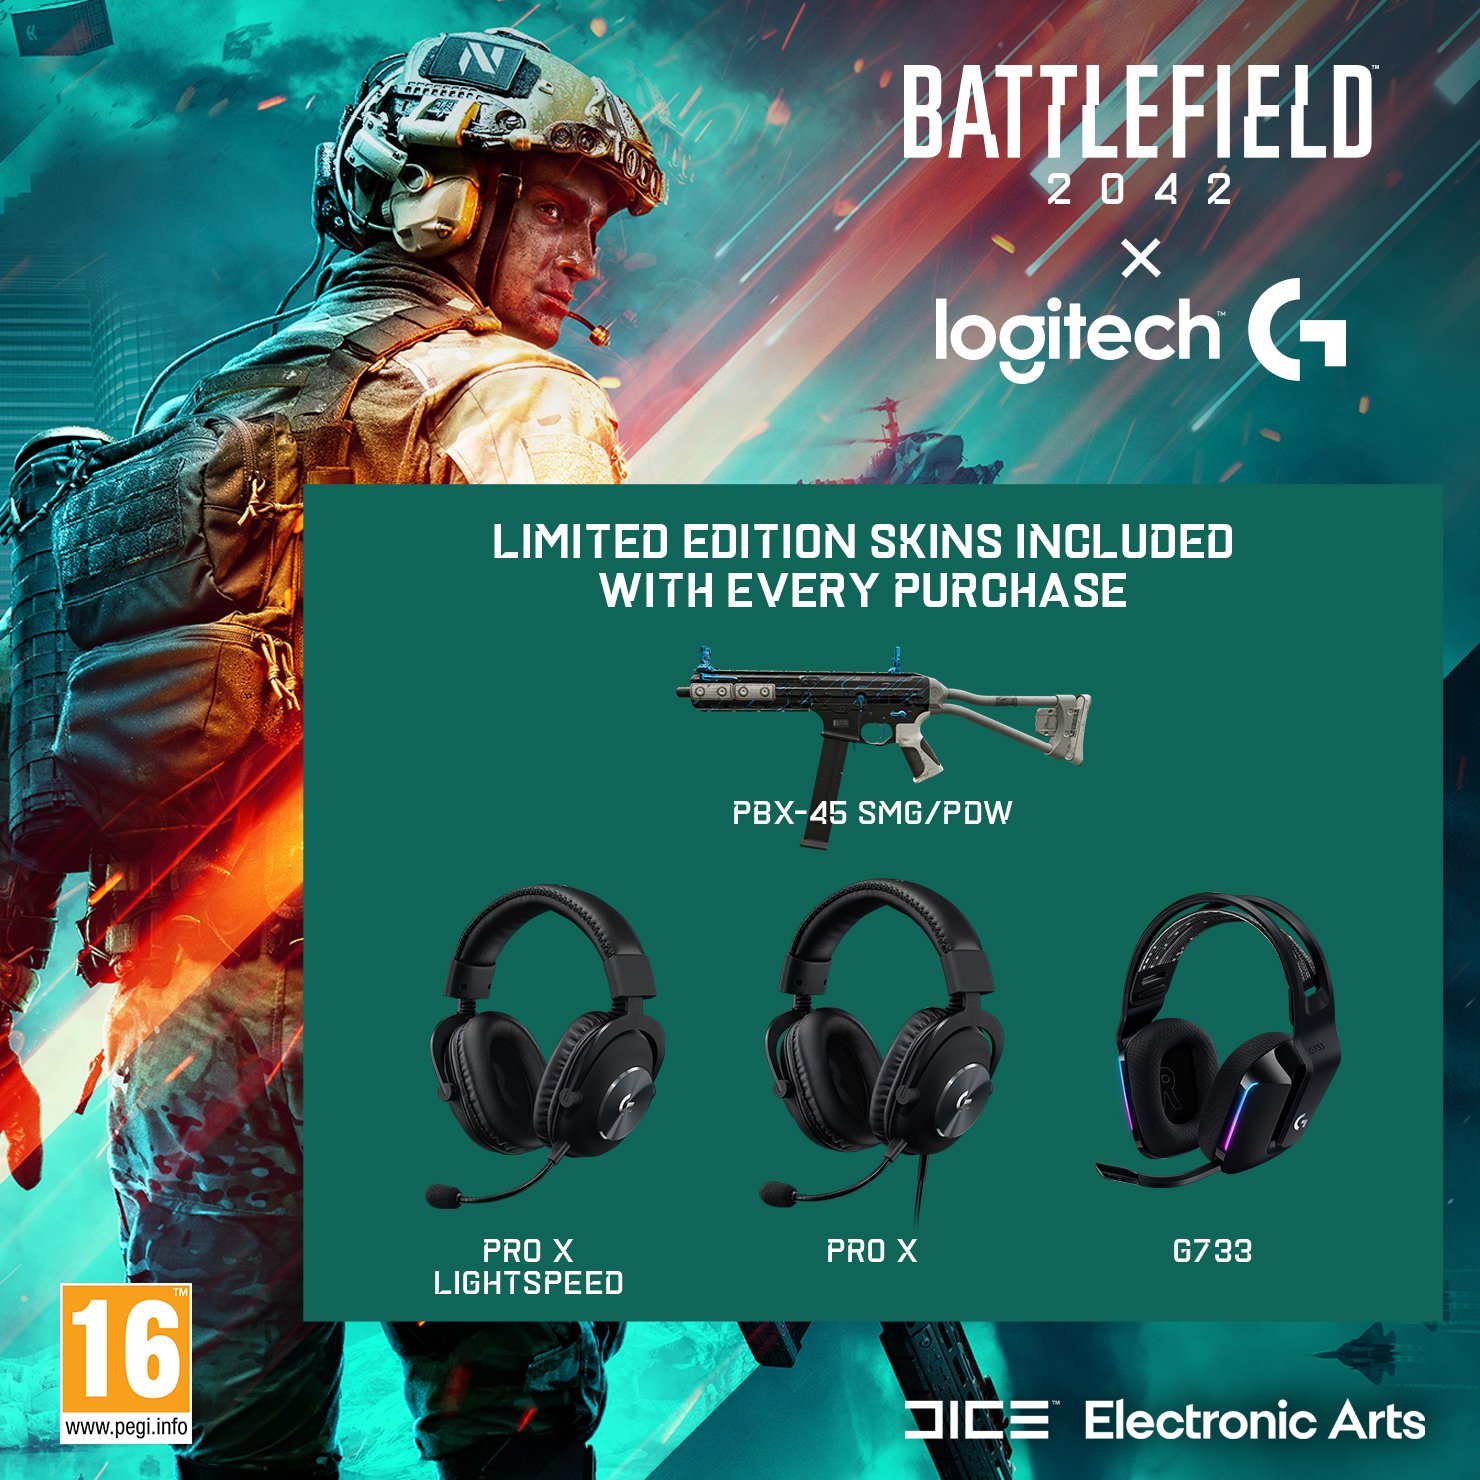 Köp Logitech G PRO X 7.1 Gaming Headset +Battlefield PC SKIN bundle